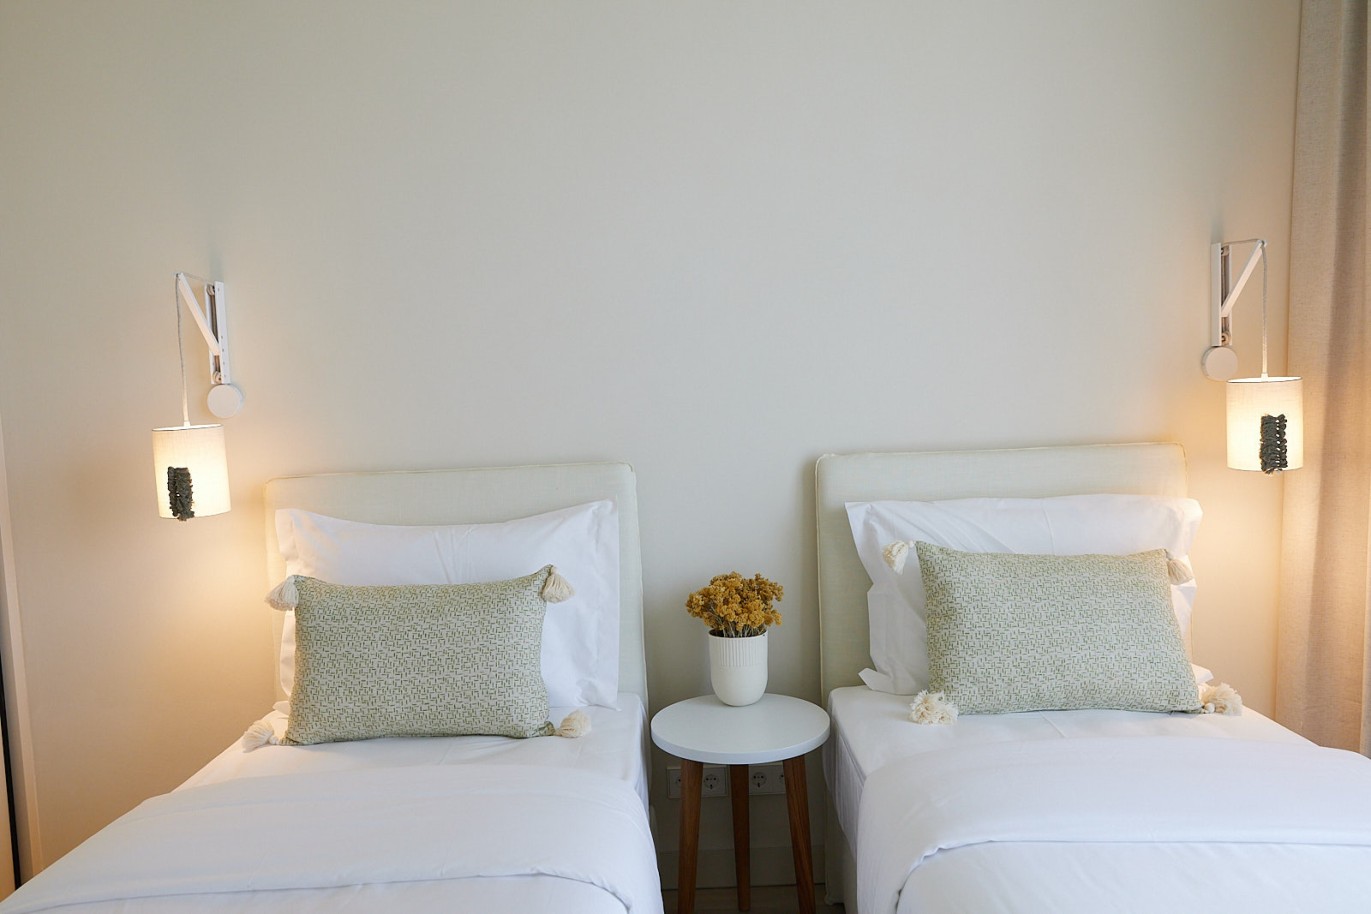 2 bedroom apartment in resort, for sale in Porches, Algarve_229161